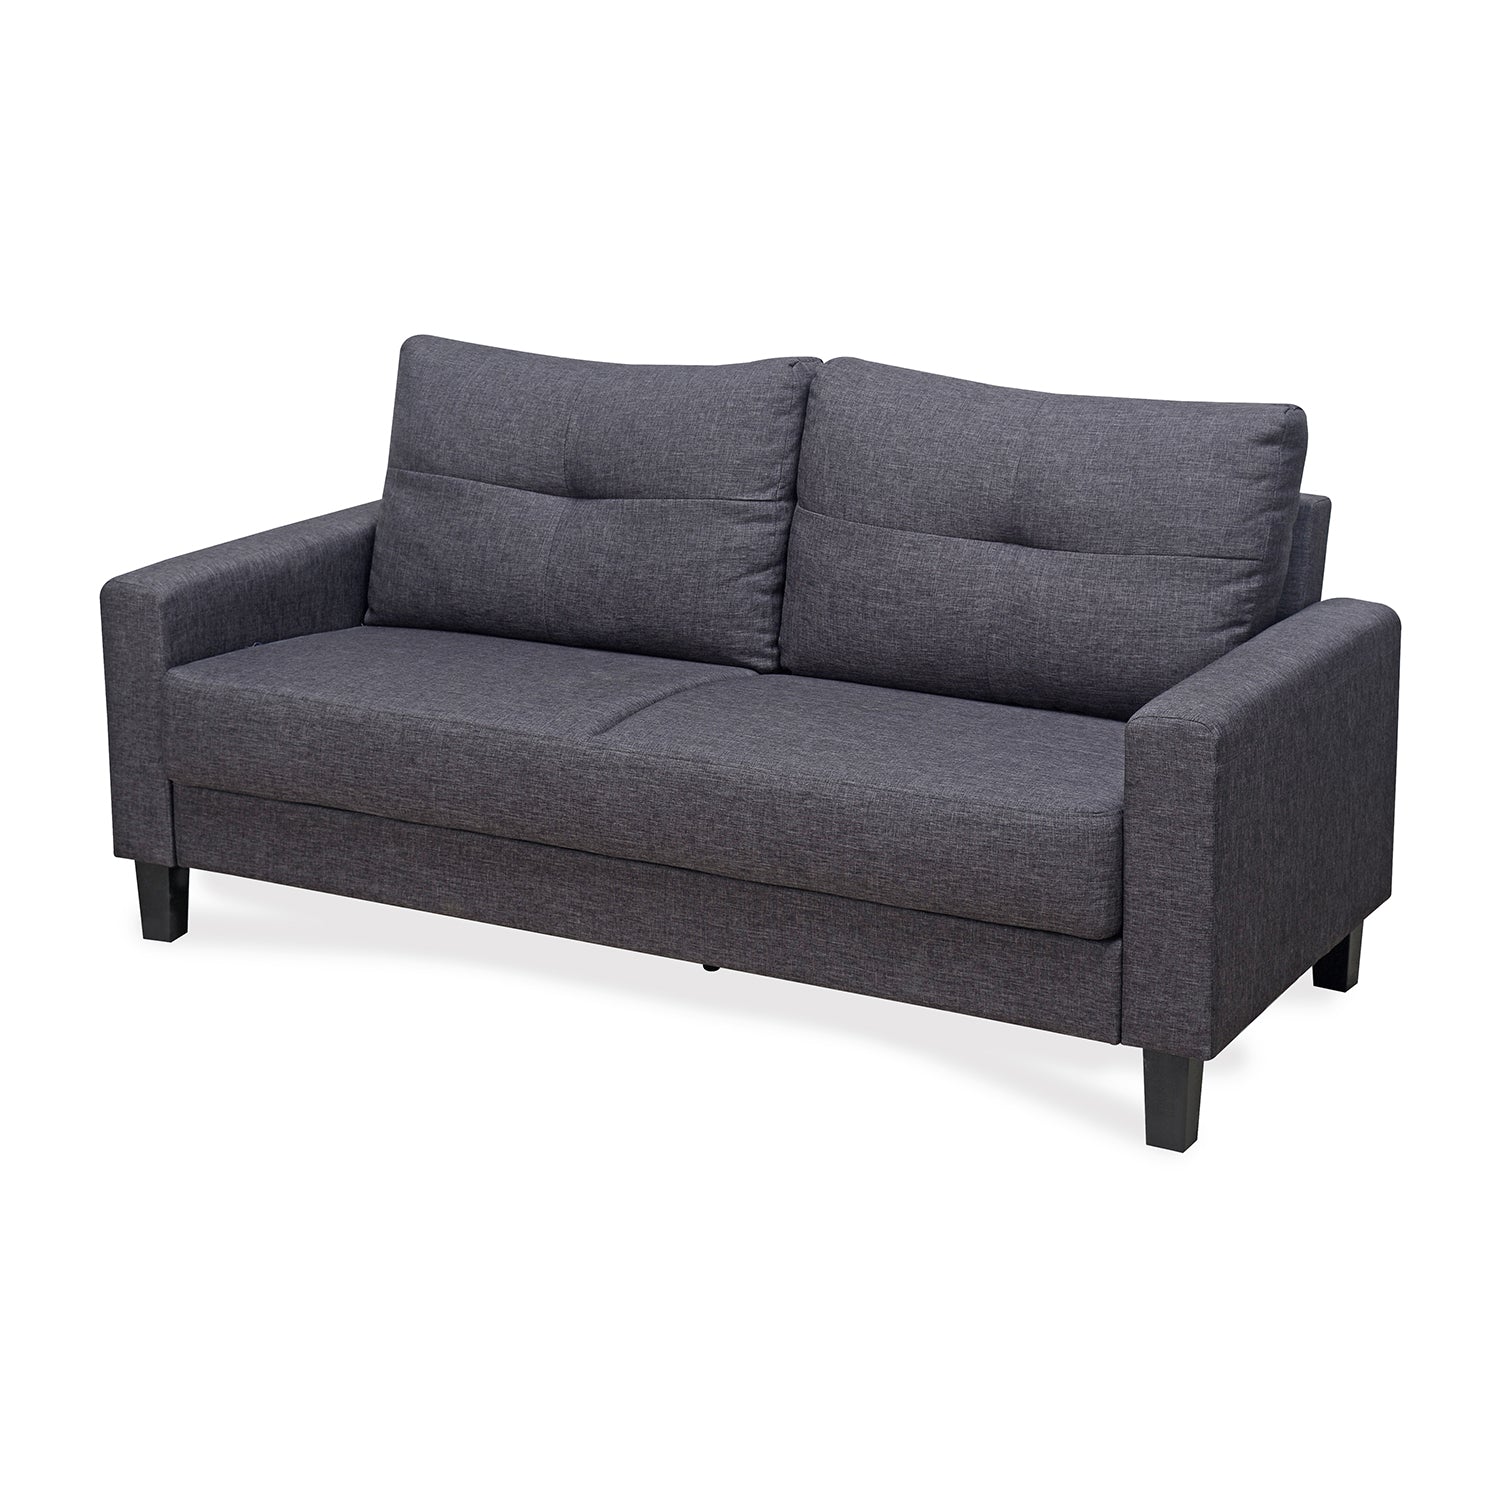 Parry 3 Seater Sofa (Grey)